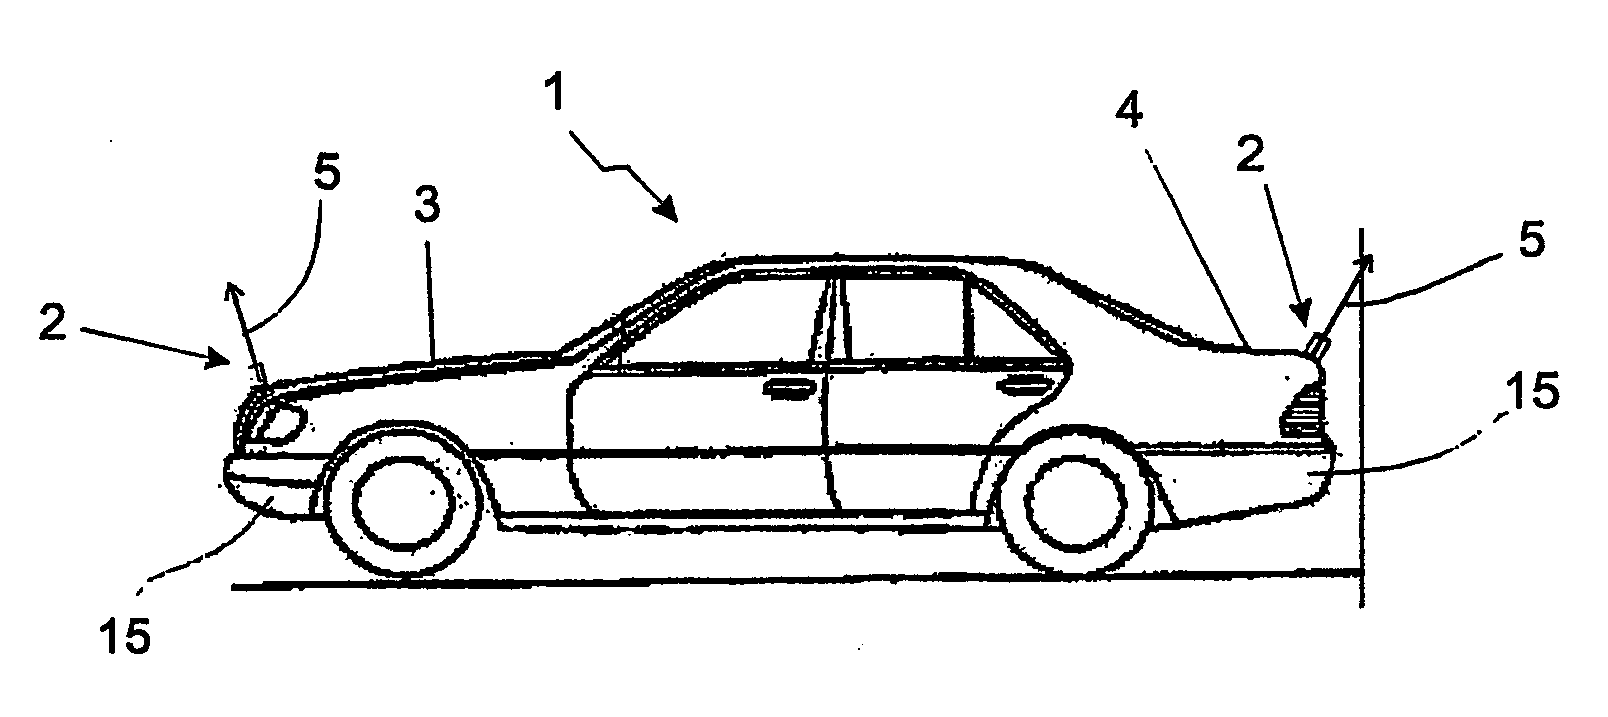 Vehicle comprising a catadioptric camera